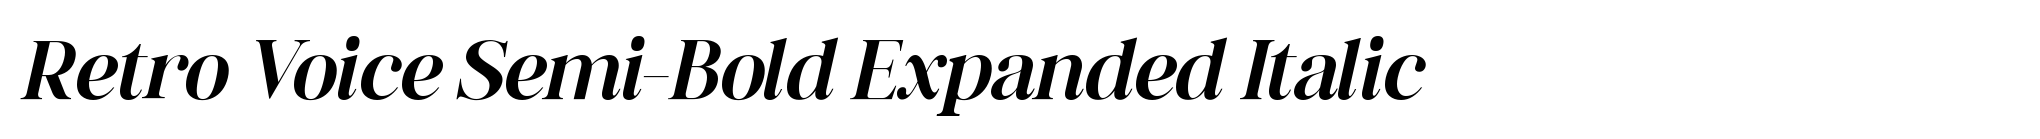 Retro Voice Semi-Bold Expanded Italic image